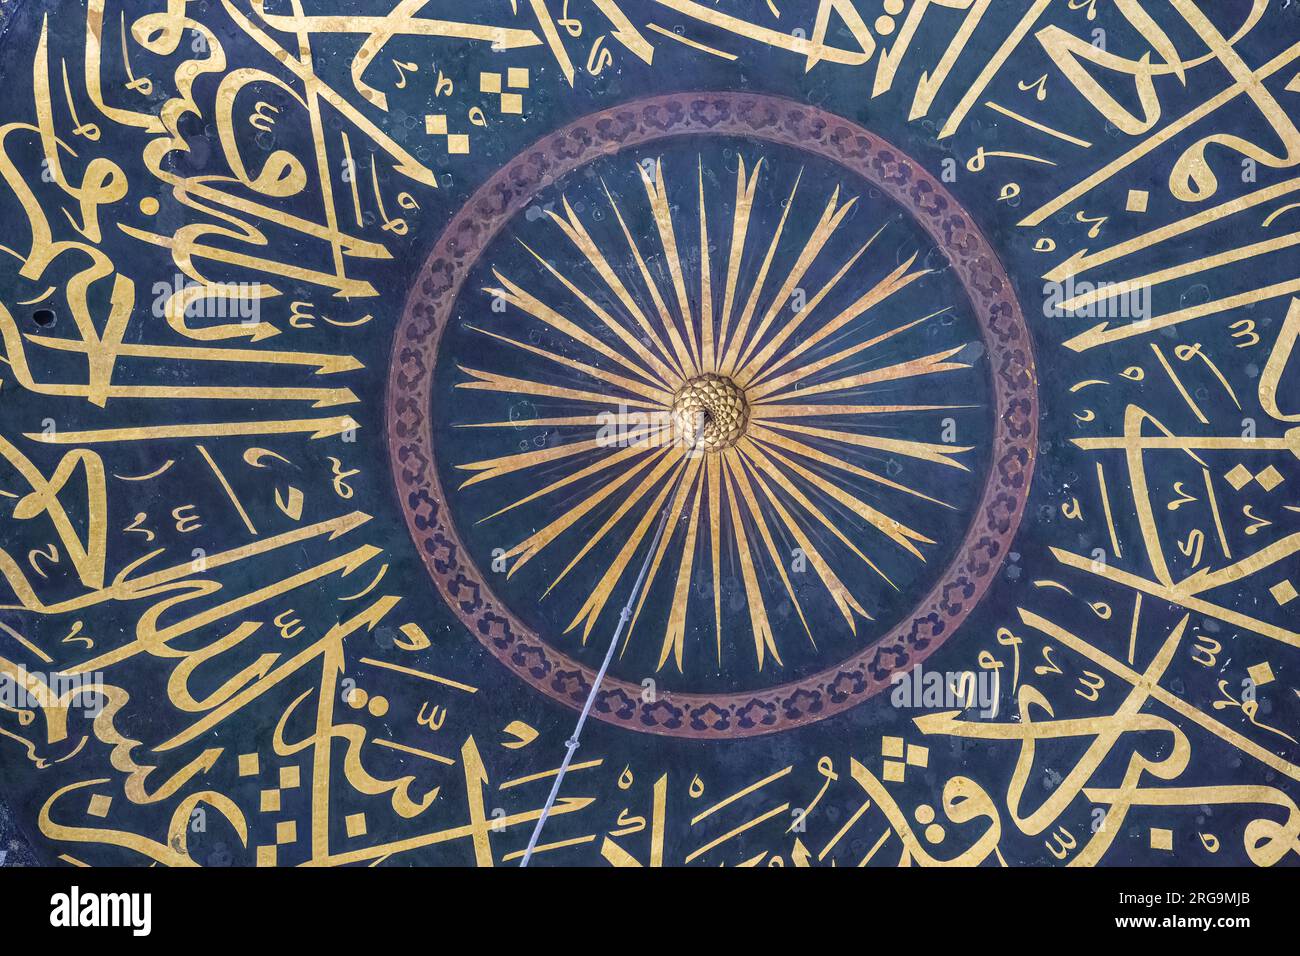 Istanbul, Turkey, Türkiye. Hagia Sophia Internal Dome with Calligraphy Decoration. Stock Photo